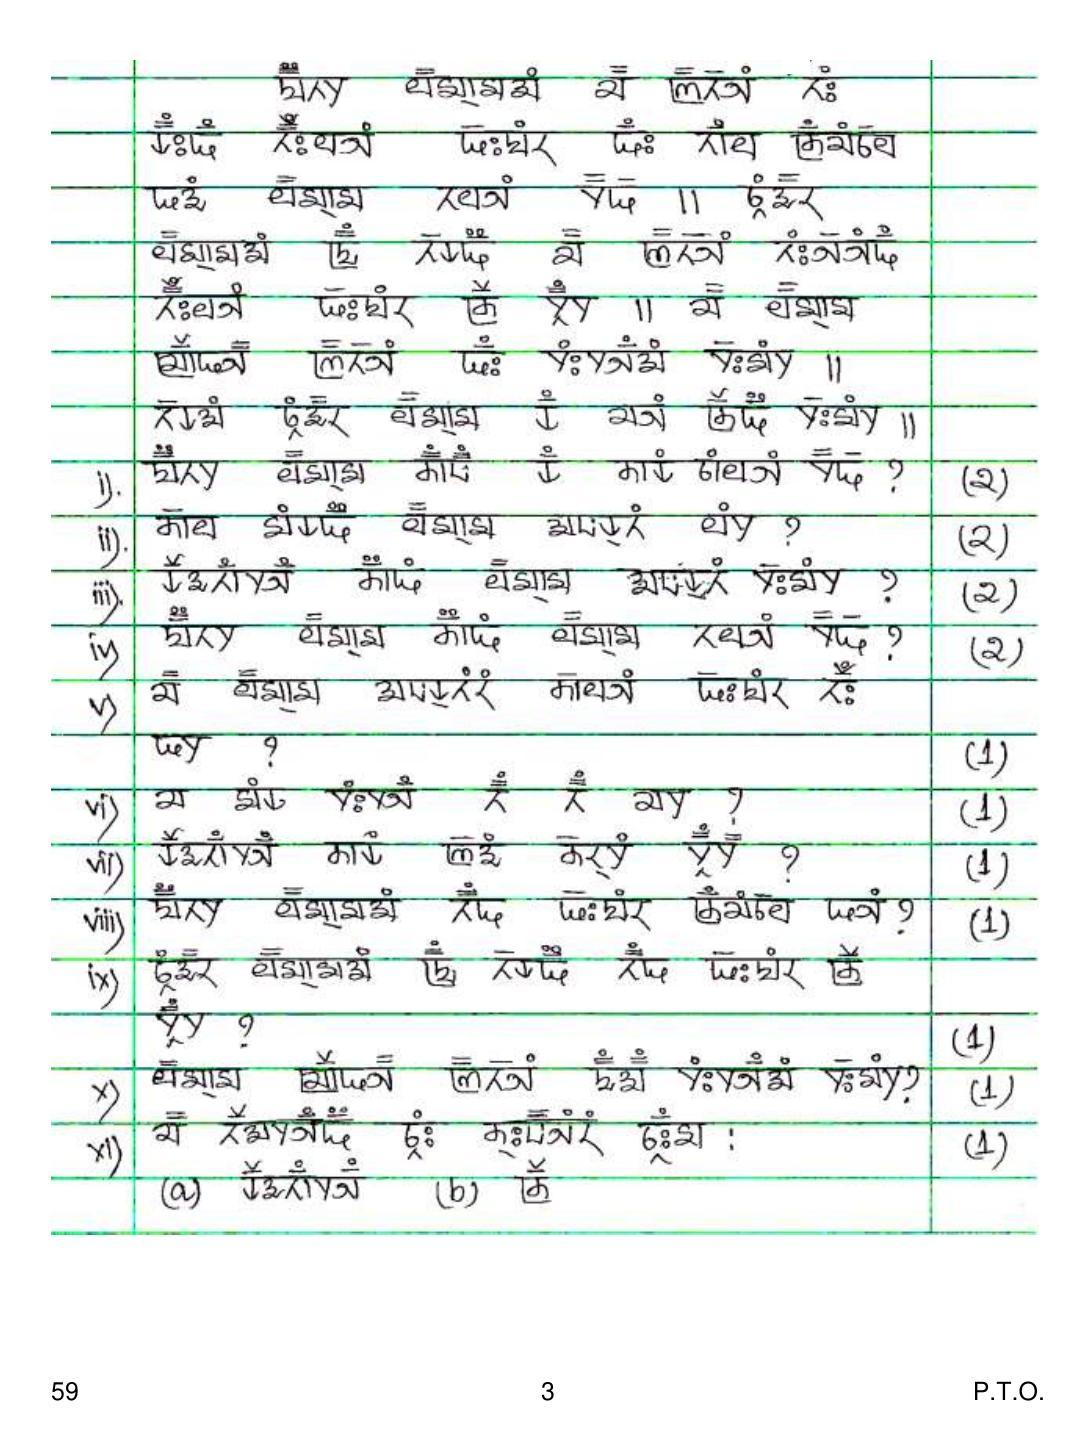 CBSE Class 10 59 Gurung 2019 Question Paper - Page 3